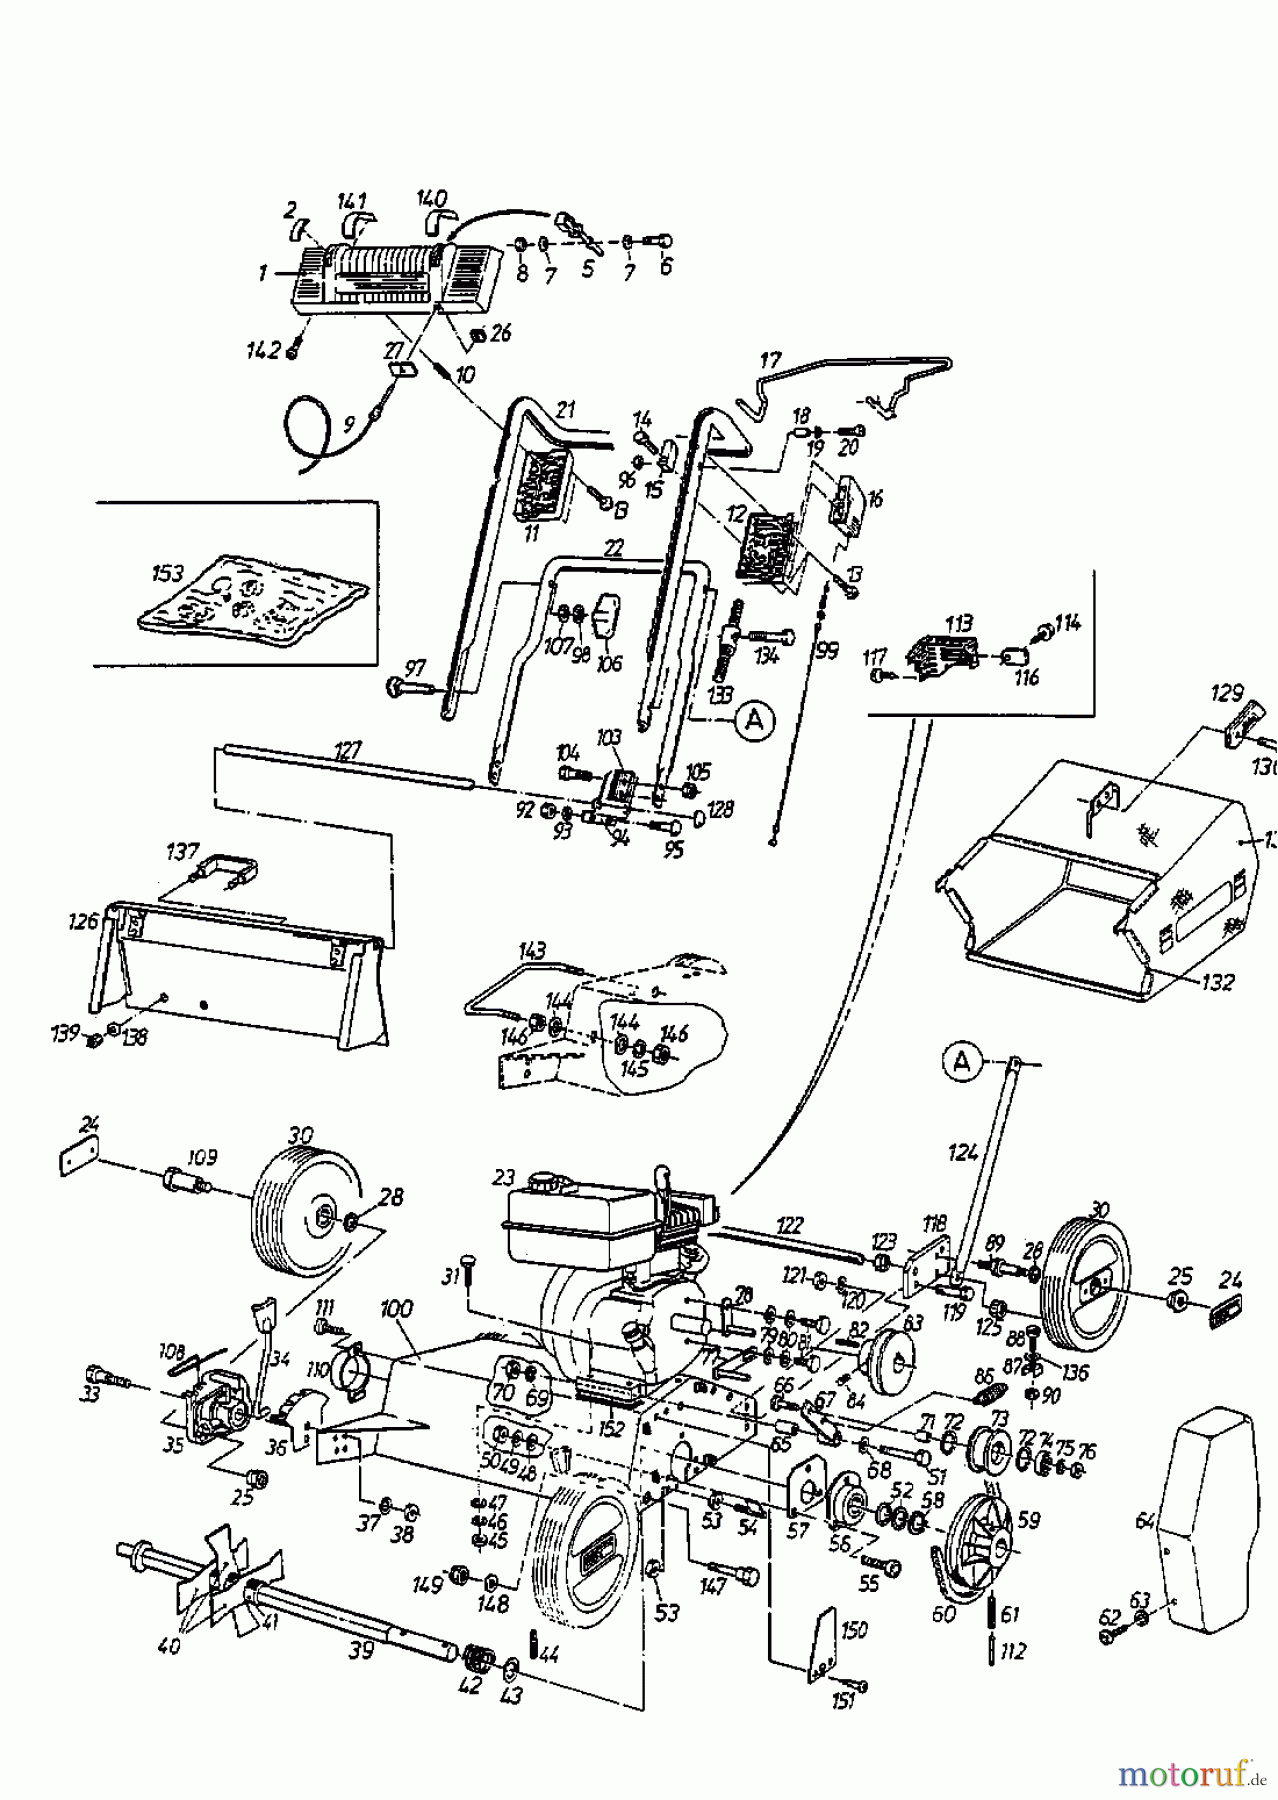  Gutbrod Petrol verticutter MV 404 16APL01U604  (1998) Basic machine